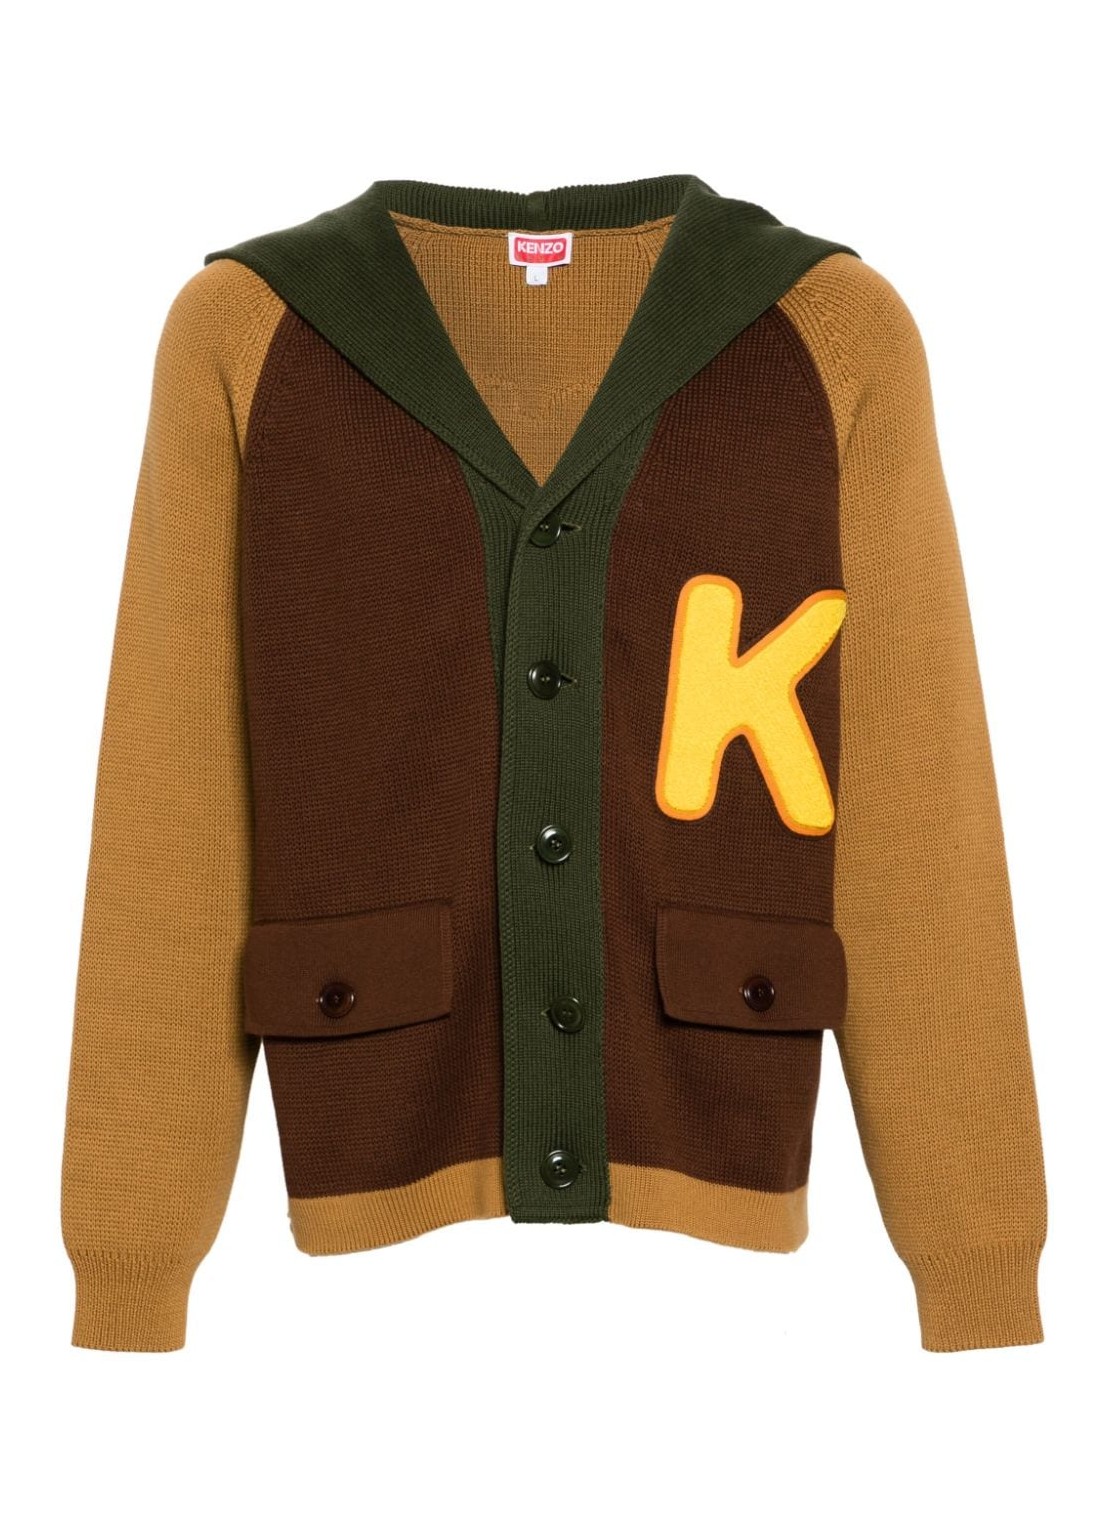 Punto kenzo knitwear man colorblock cardigan fe55ca4383bi 14 talla marron
 